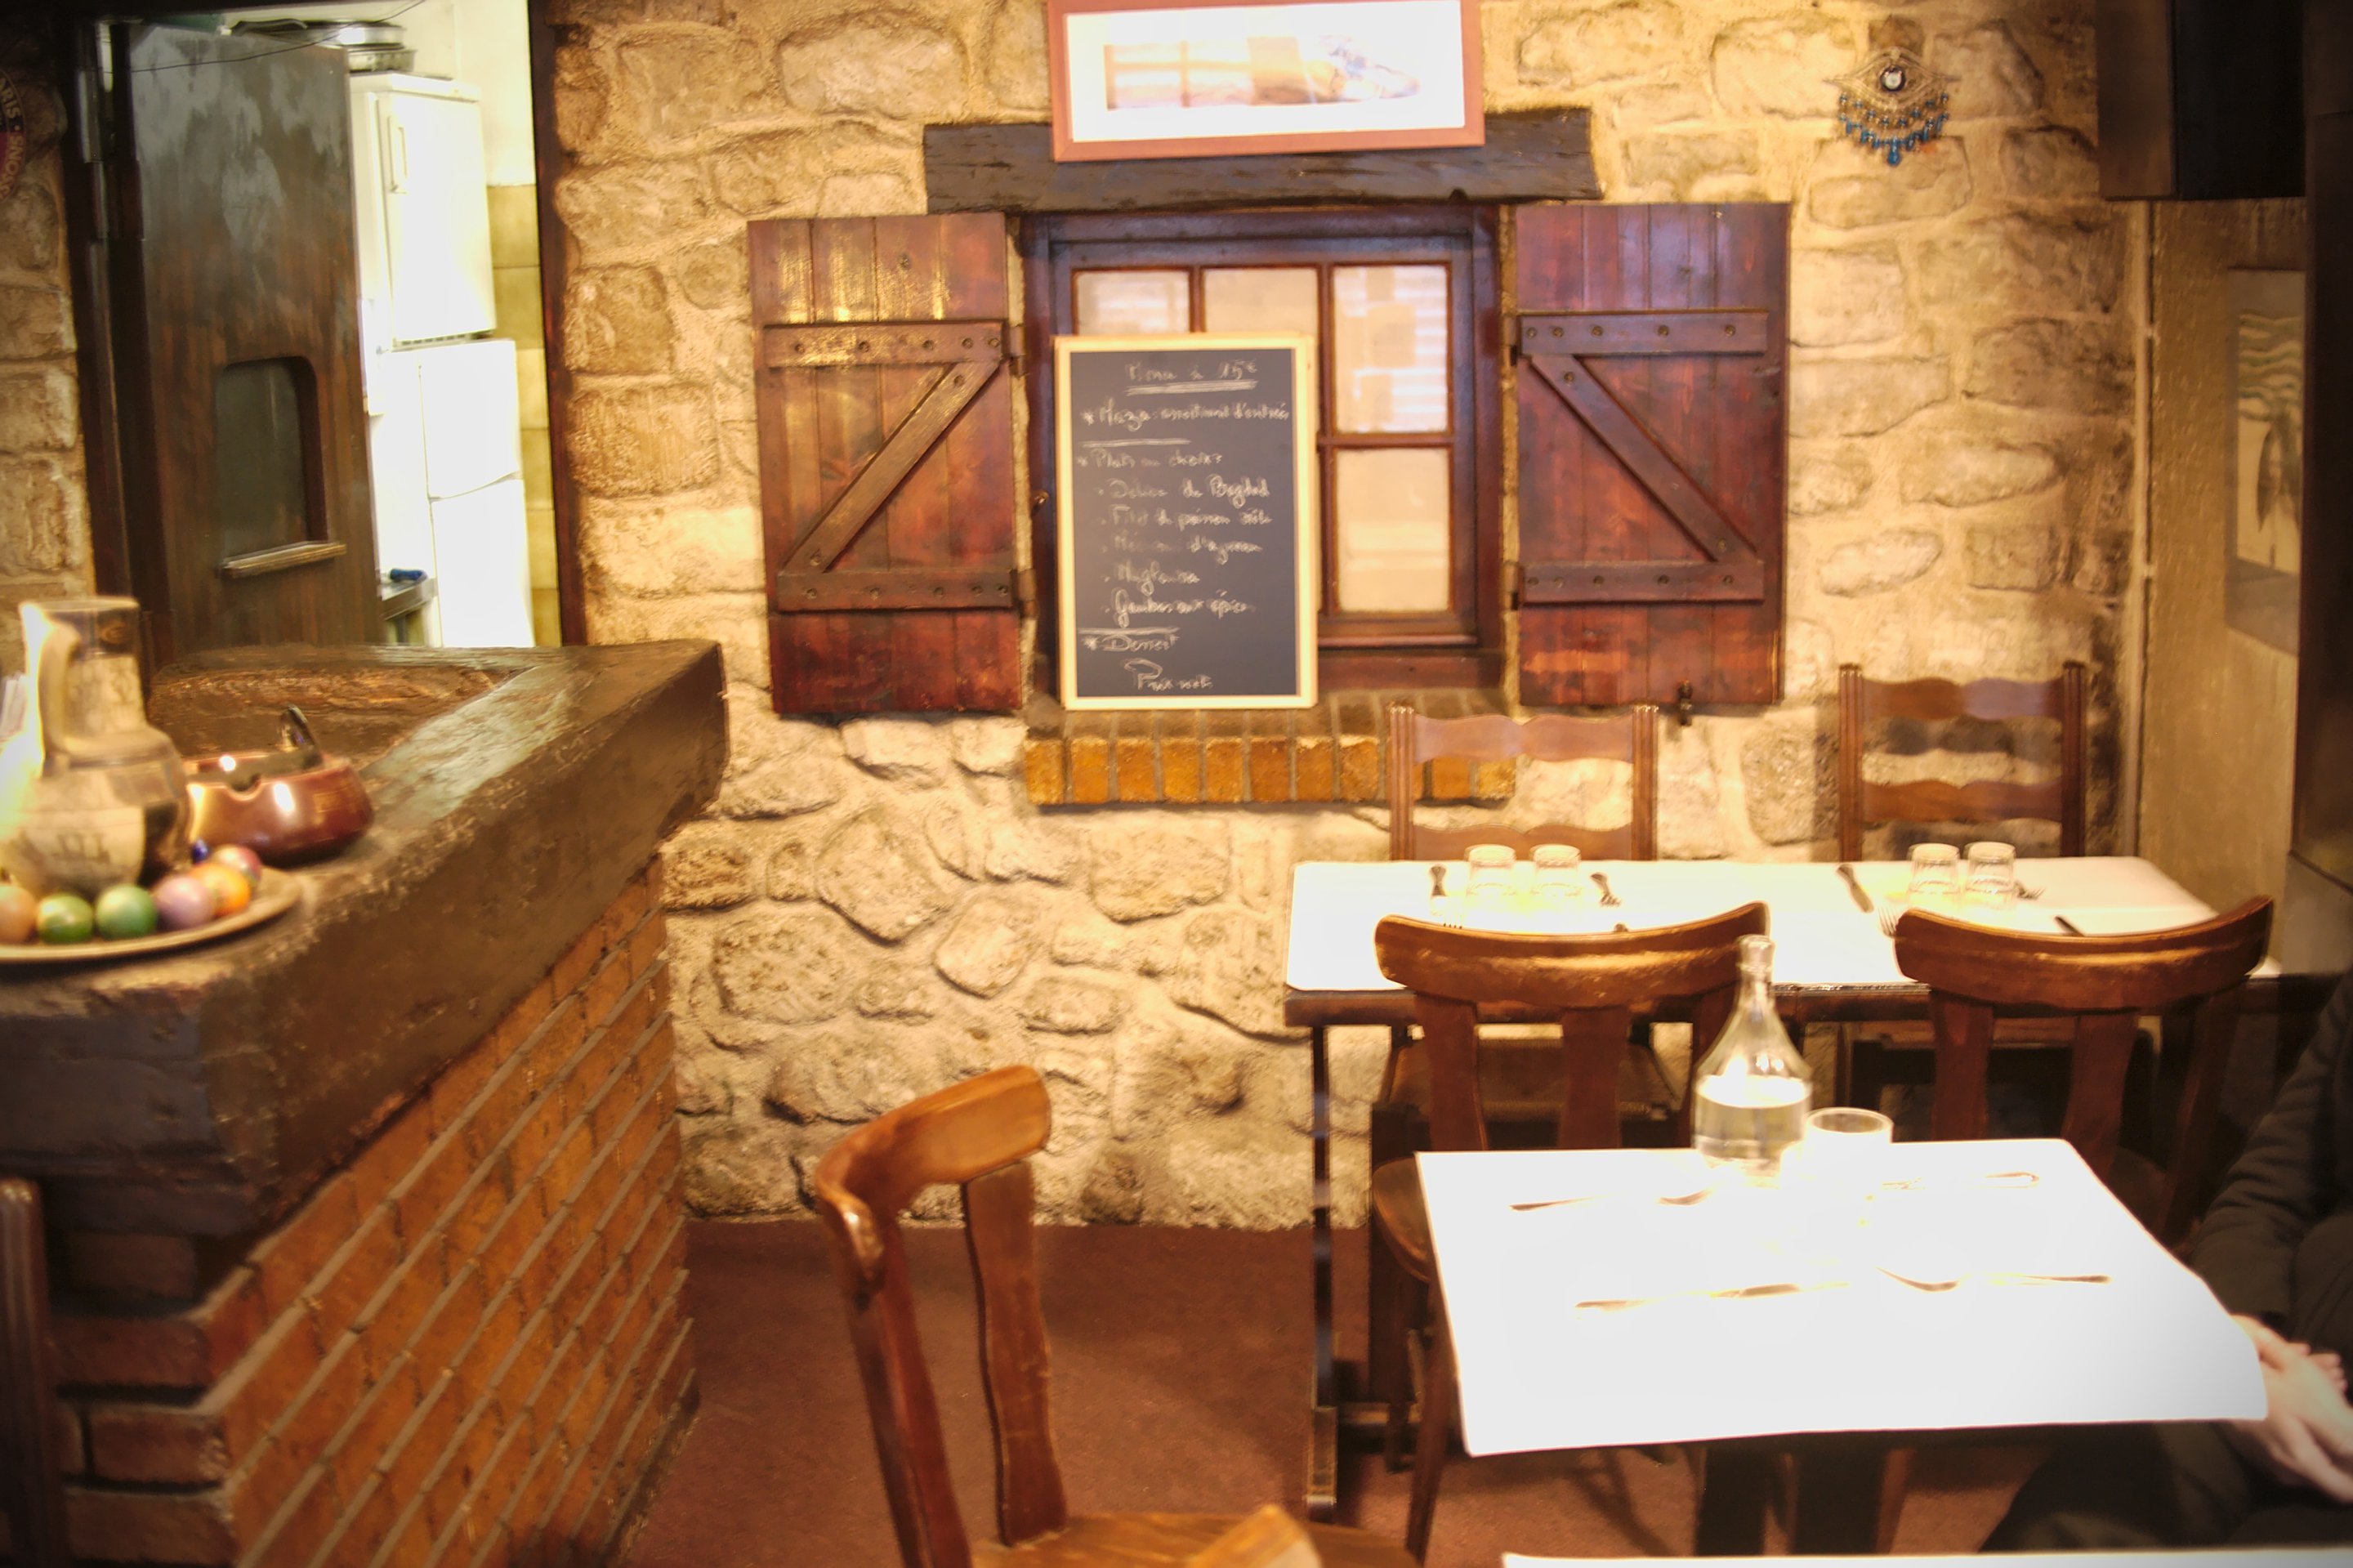 Iraqi restaurant interior Paris photographed by luxagraf